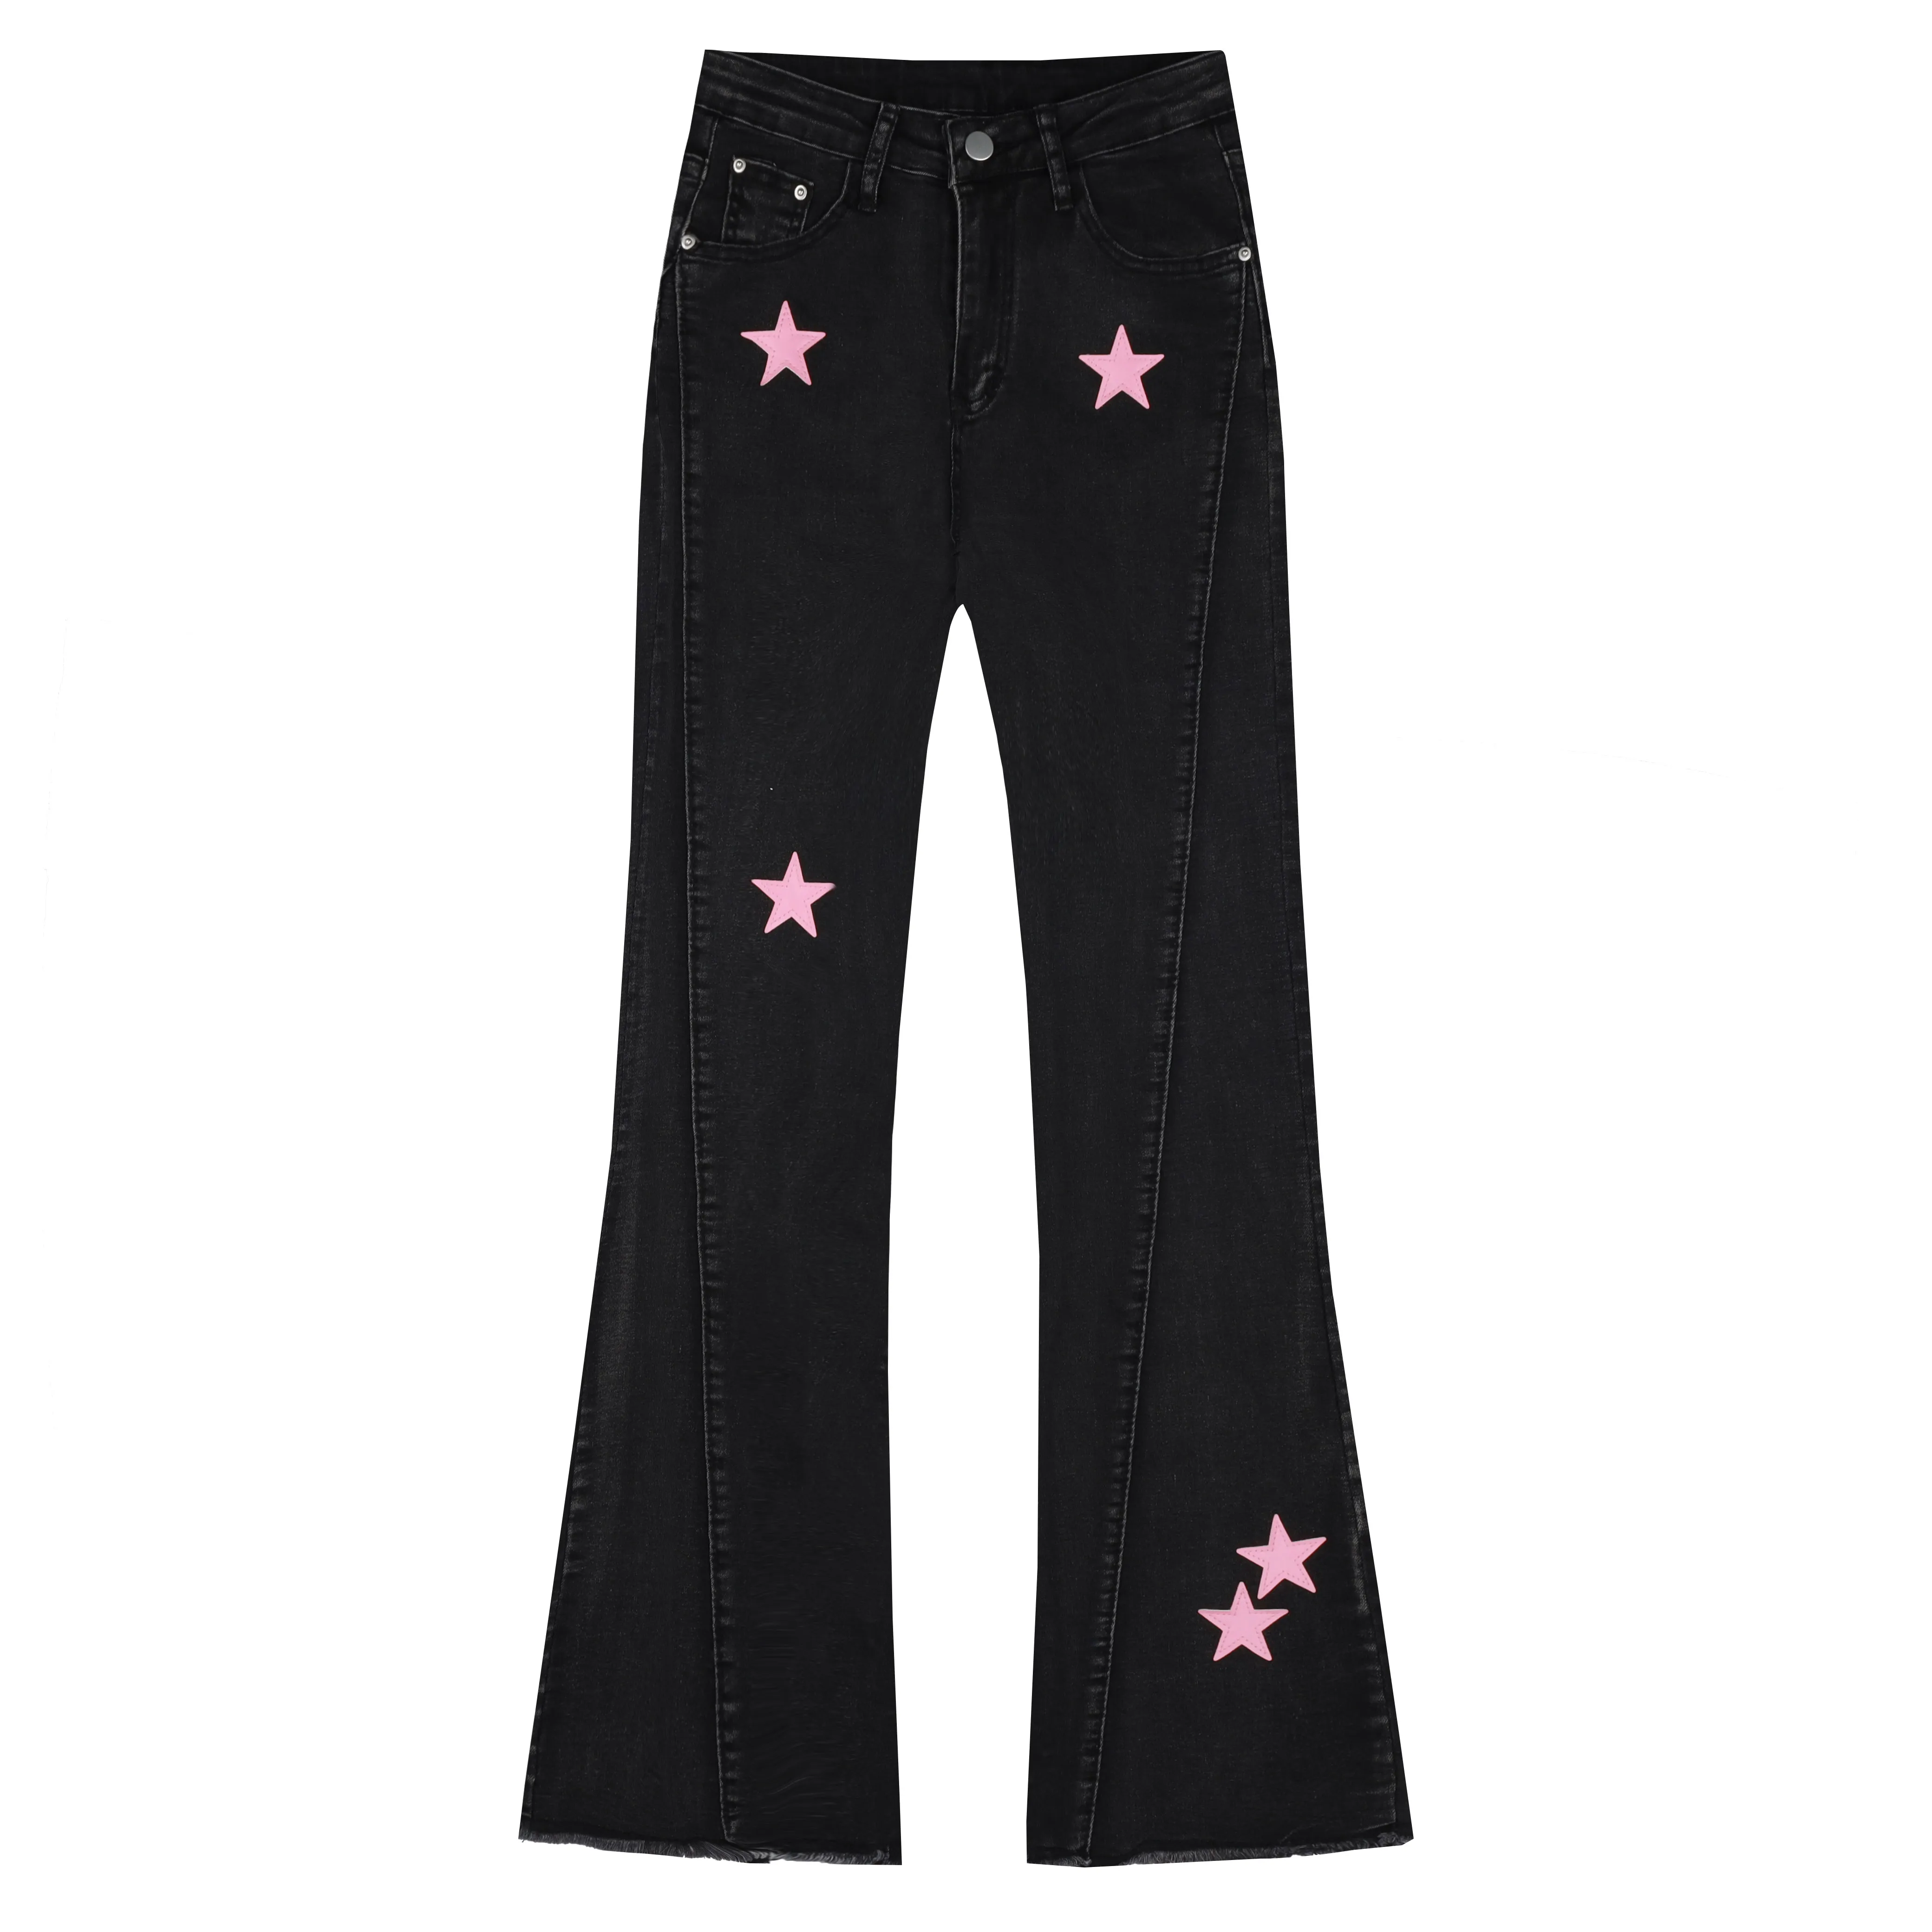 Custom Five-pointed Star Boot Cut Flared Black Jeans Pants For Women Women's Denim Jeans Jeans Women wholesale